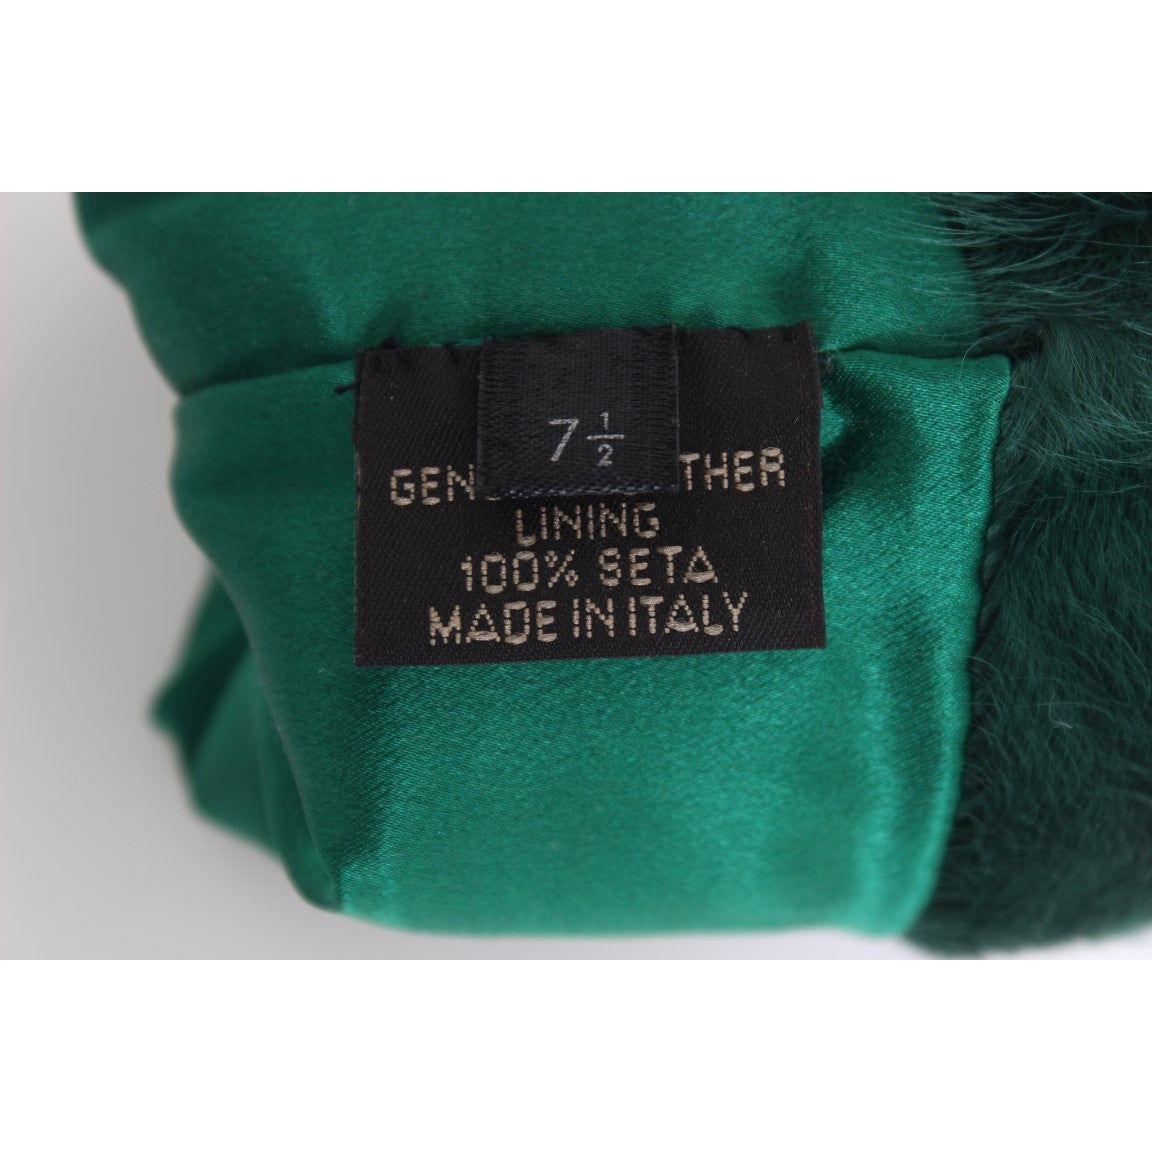 Dolce & Gabbana Elegant Elbow-Length Leather Gloves green-leather-xiangao-fur-elbow-gloves 332608-green-leather-xiangao-fur-elbow-gloves-5.jpg